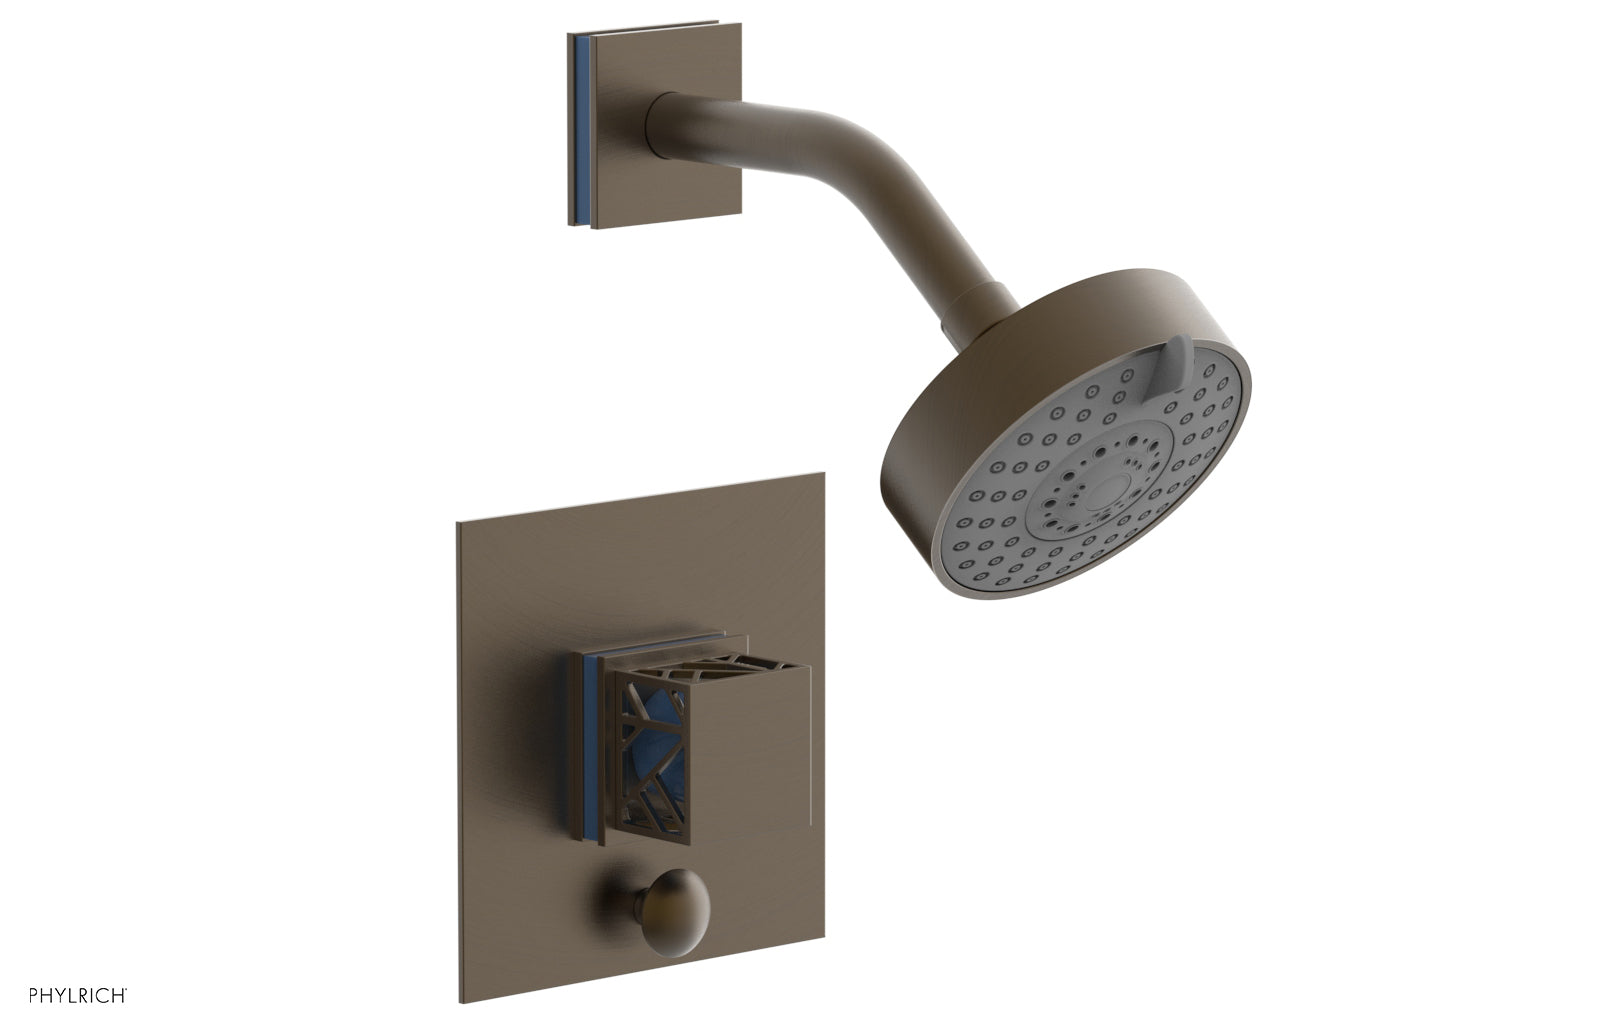 Phylrich JOLIE Pressure Balance Shower and Diverter Set (Less Spout), Square Handle with "Light Blue" Accents